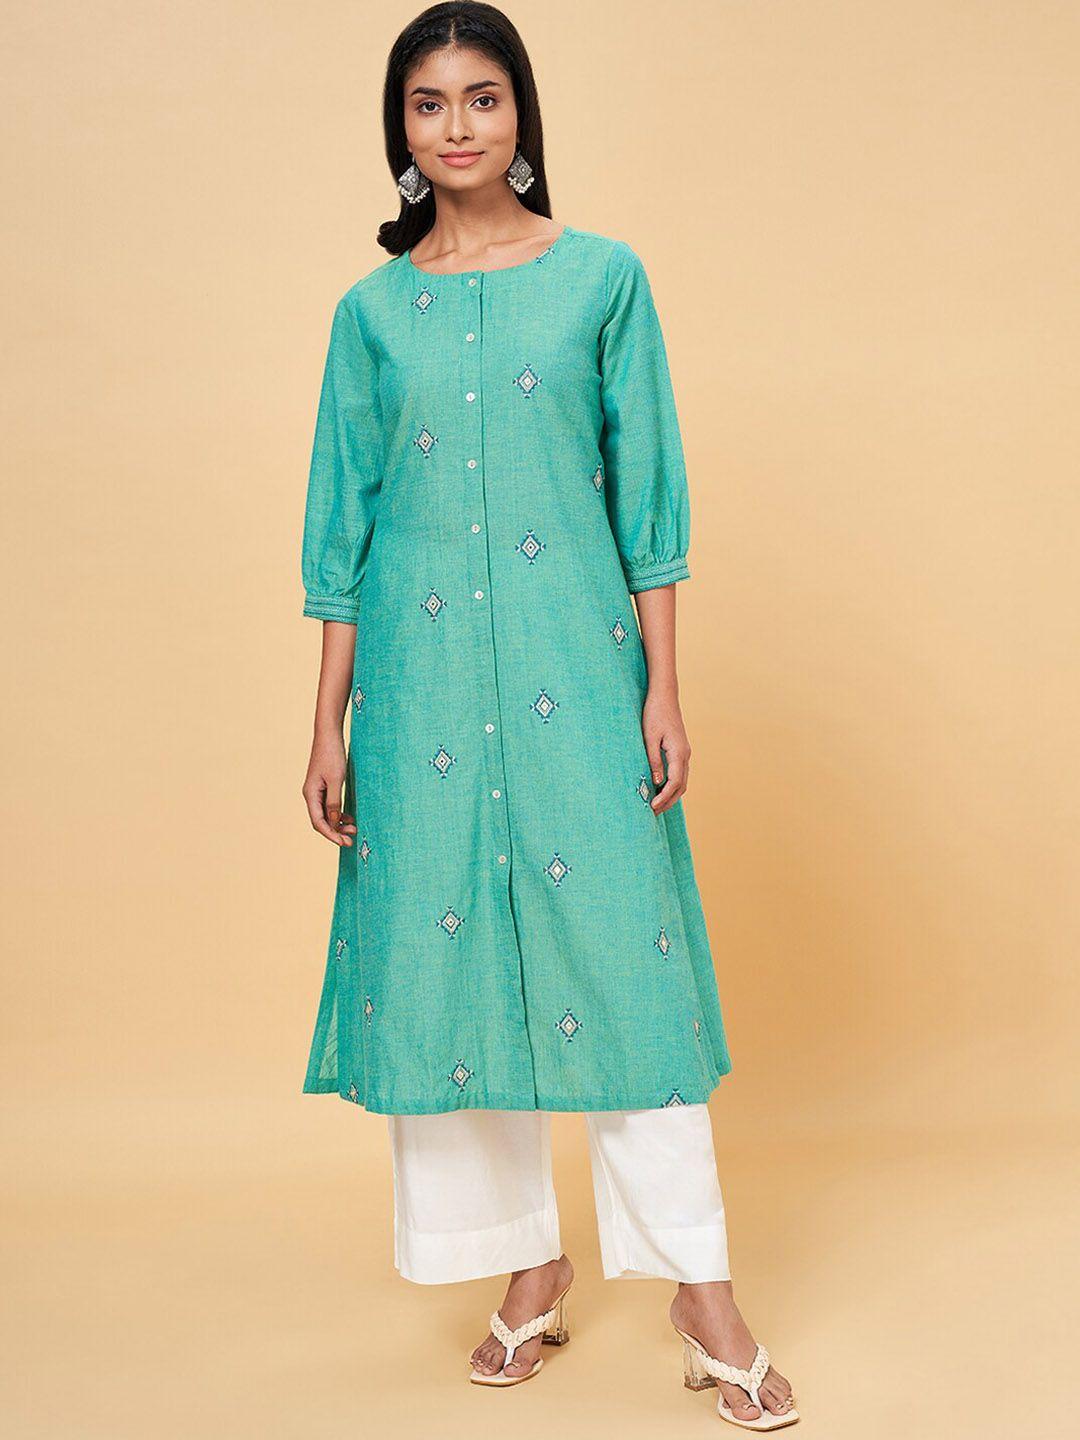 rangmanch by pantaloons women green geometric dyed kurta